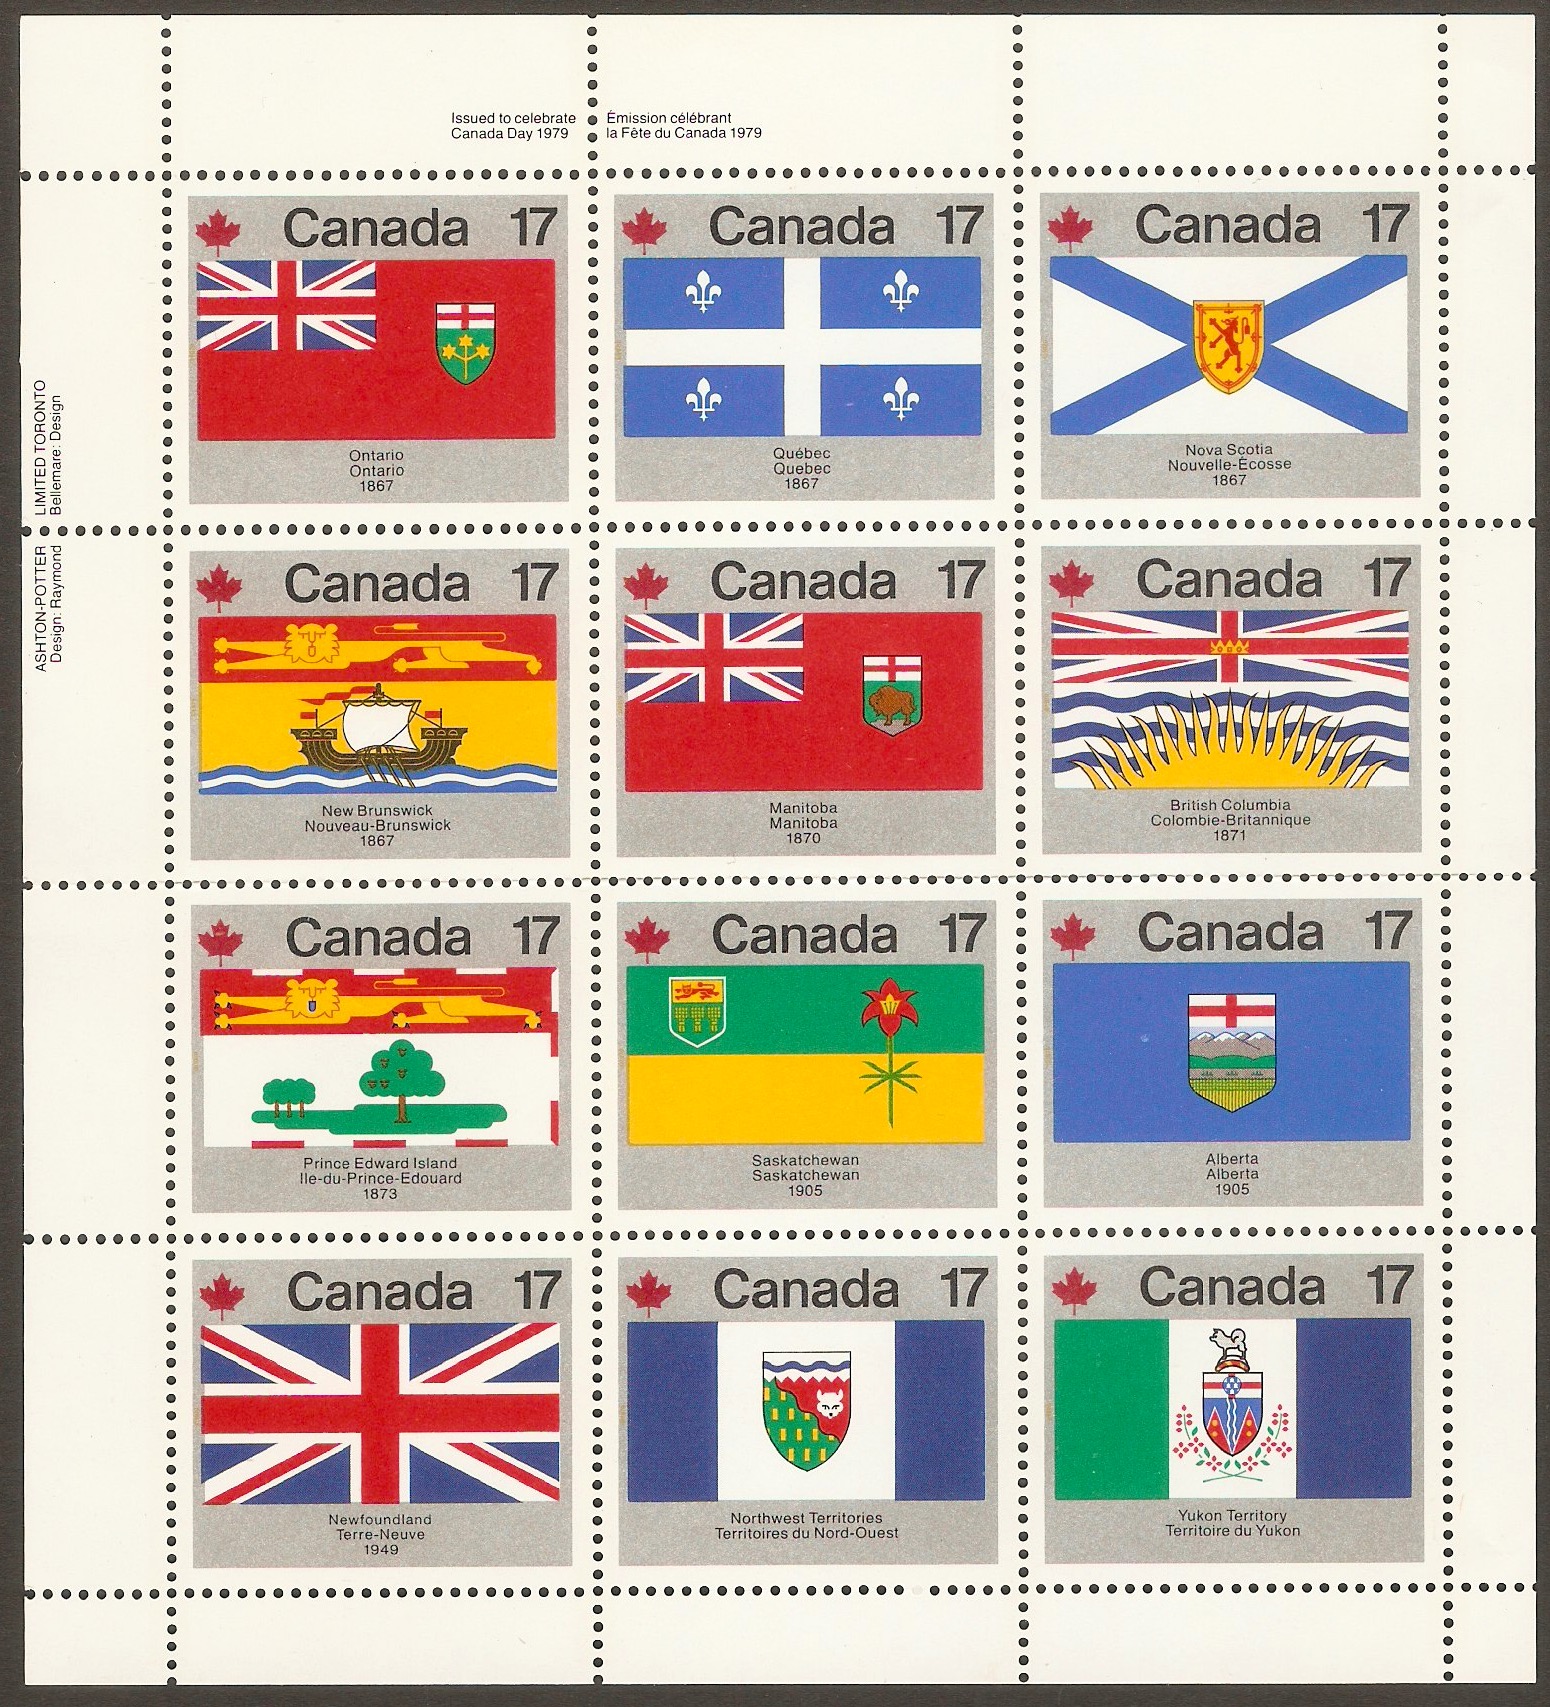 Canada 1979 Canada Day - Flags Set. SG944a-SG944l.